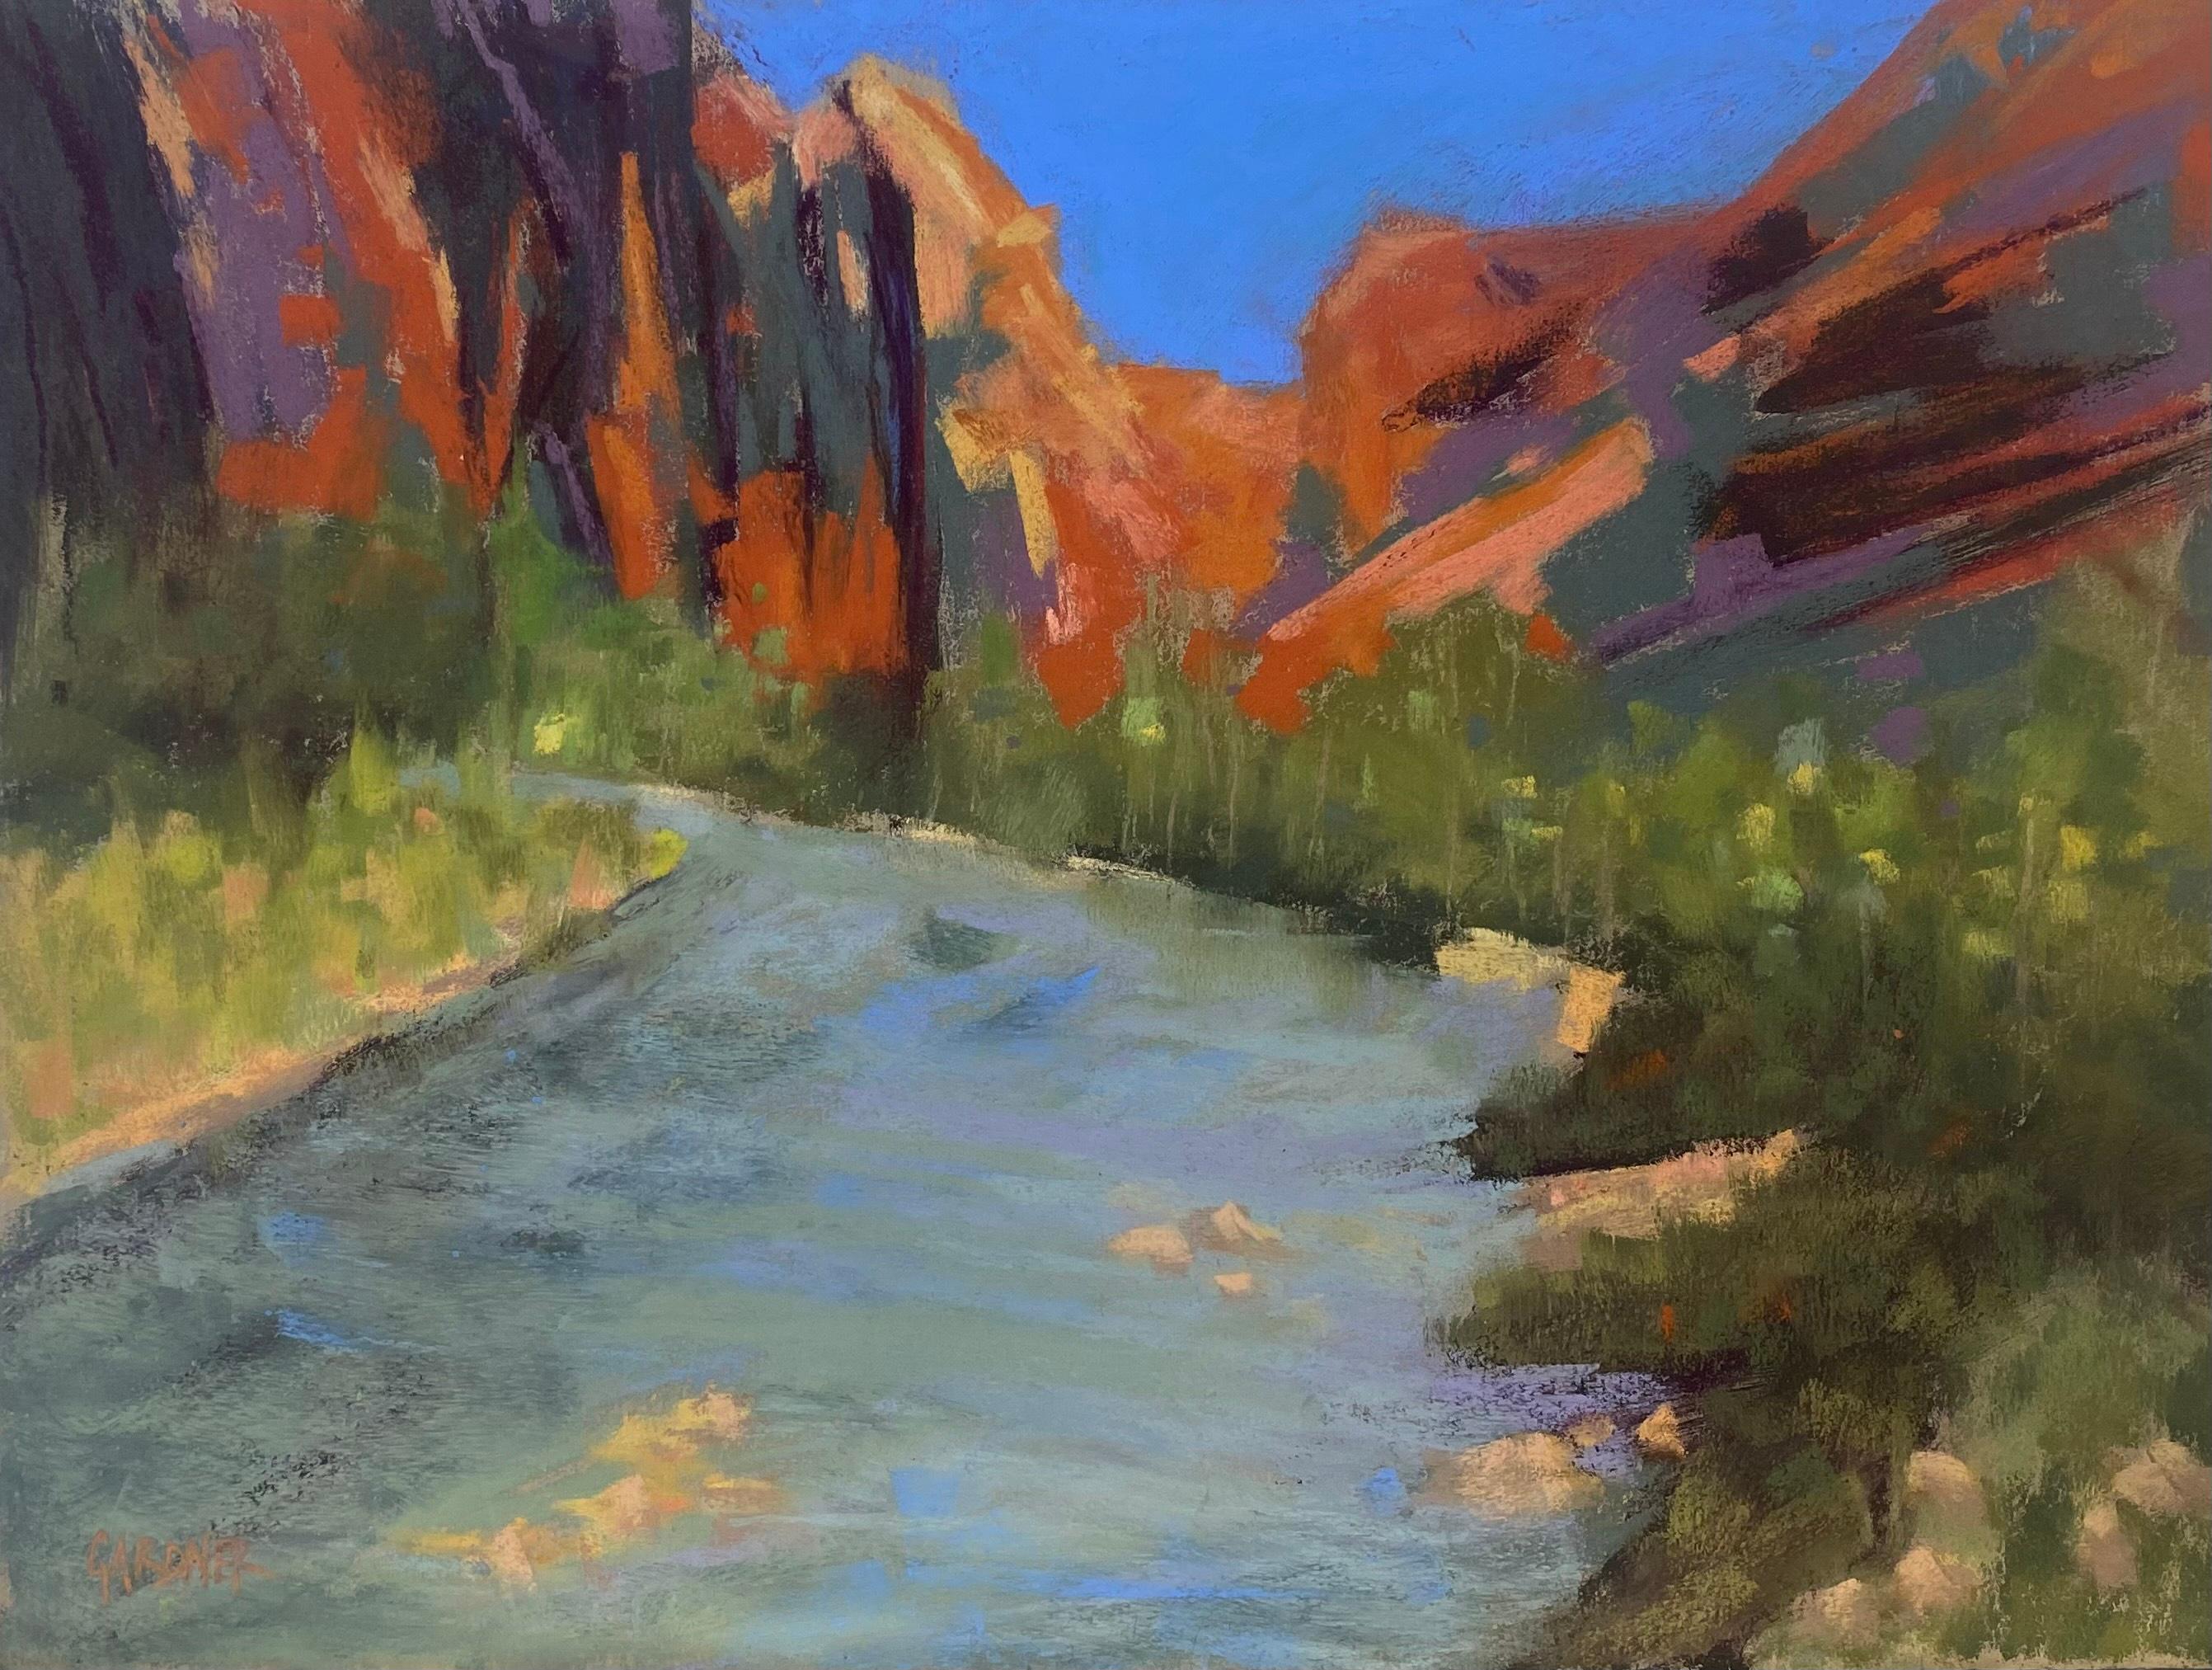 Only A River's (Gonna Make Things Right), peinture de paysage impressionniste originale
9